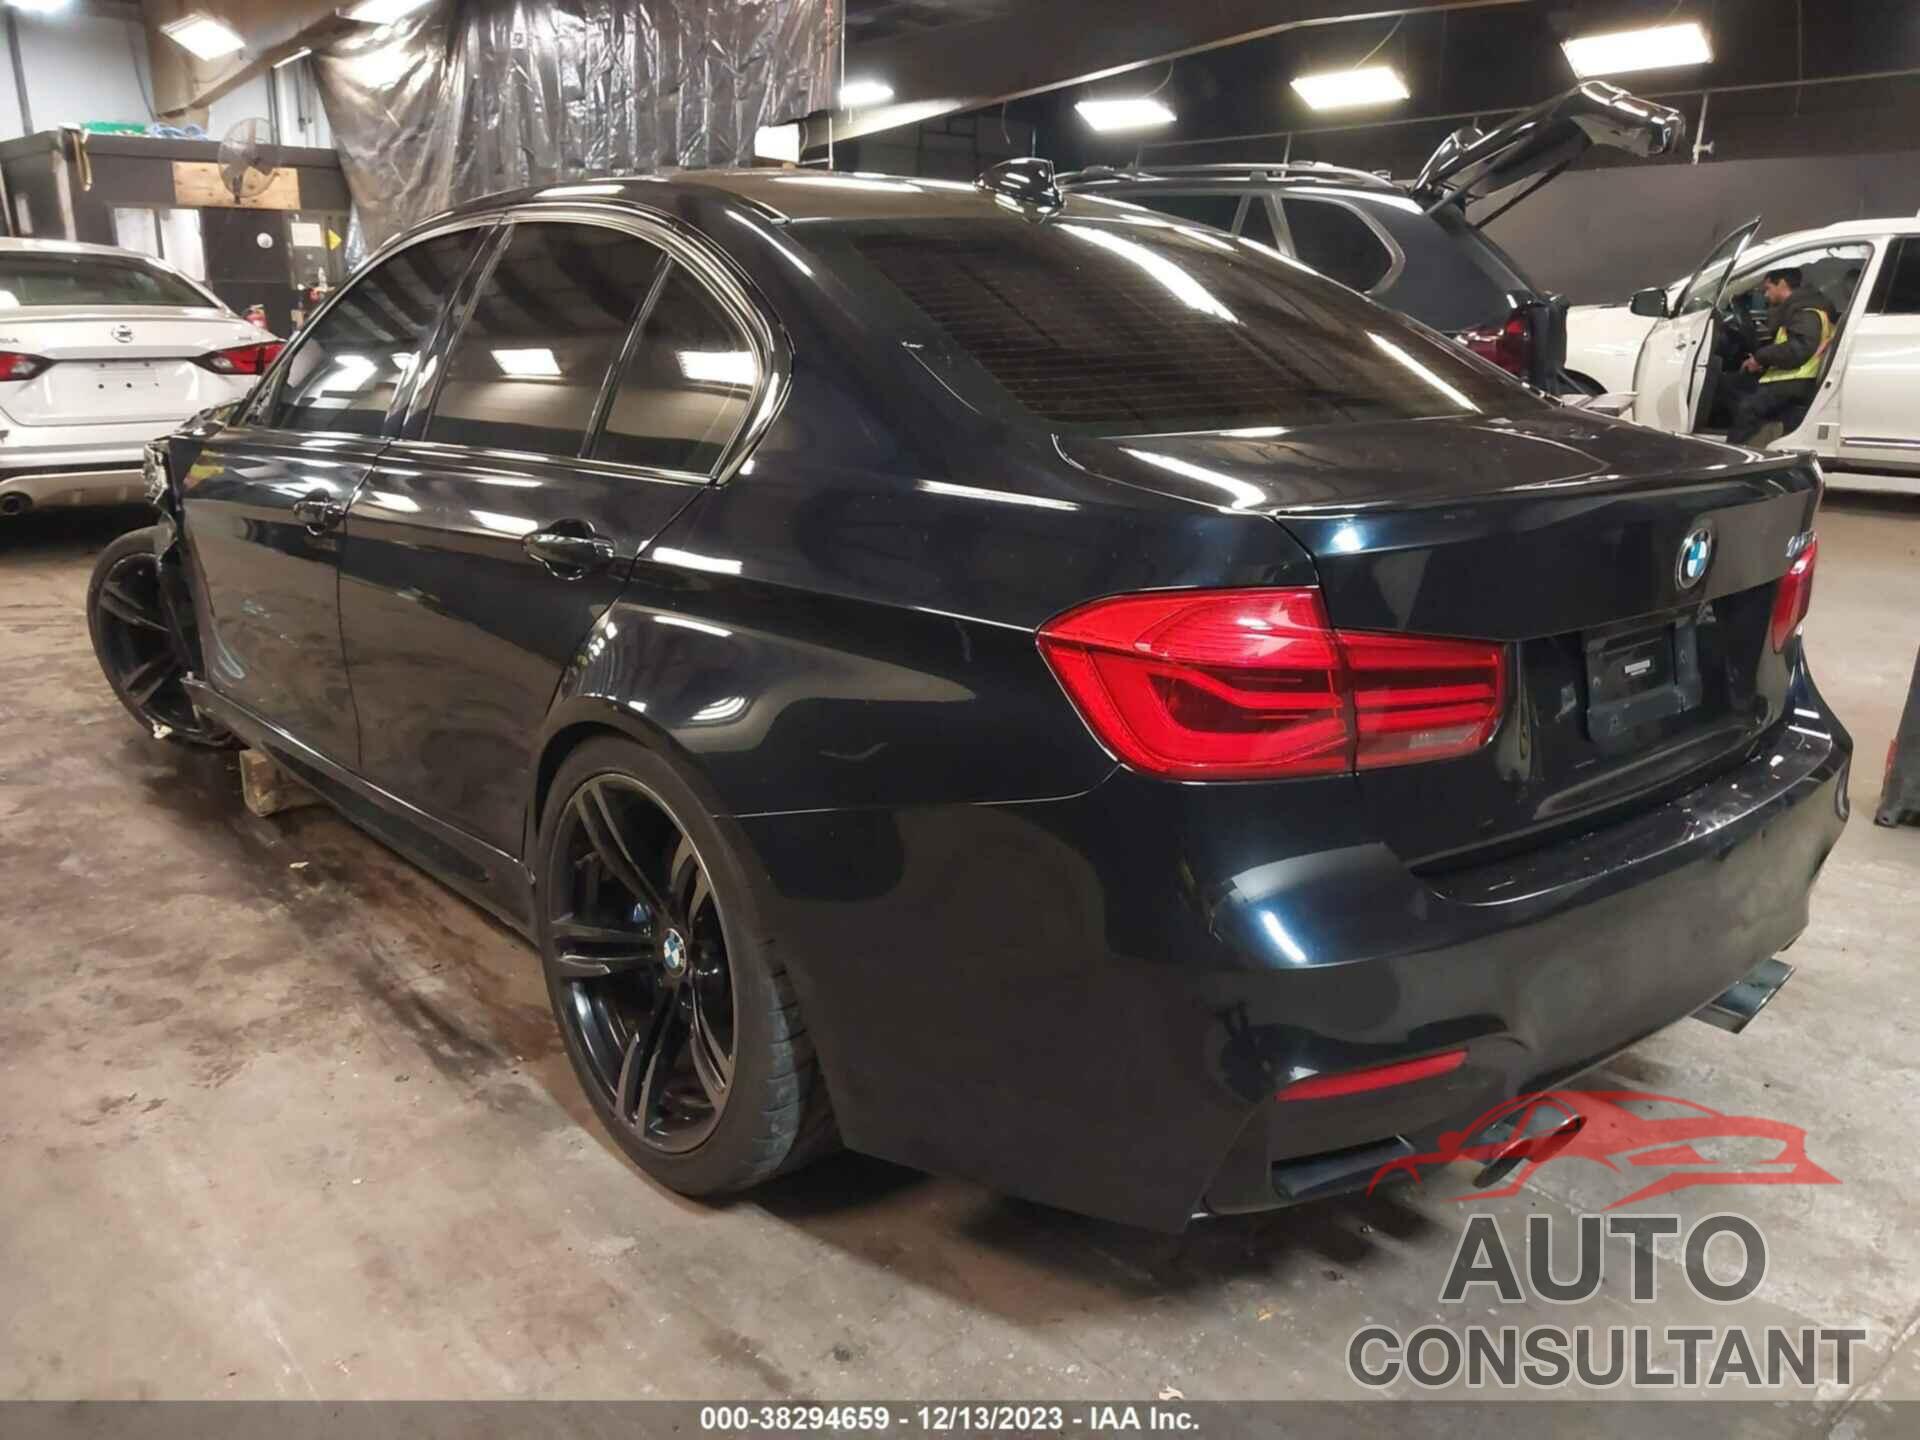 BMW M3 2016 - WBS8M9C50G5D30698